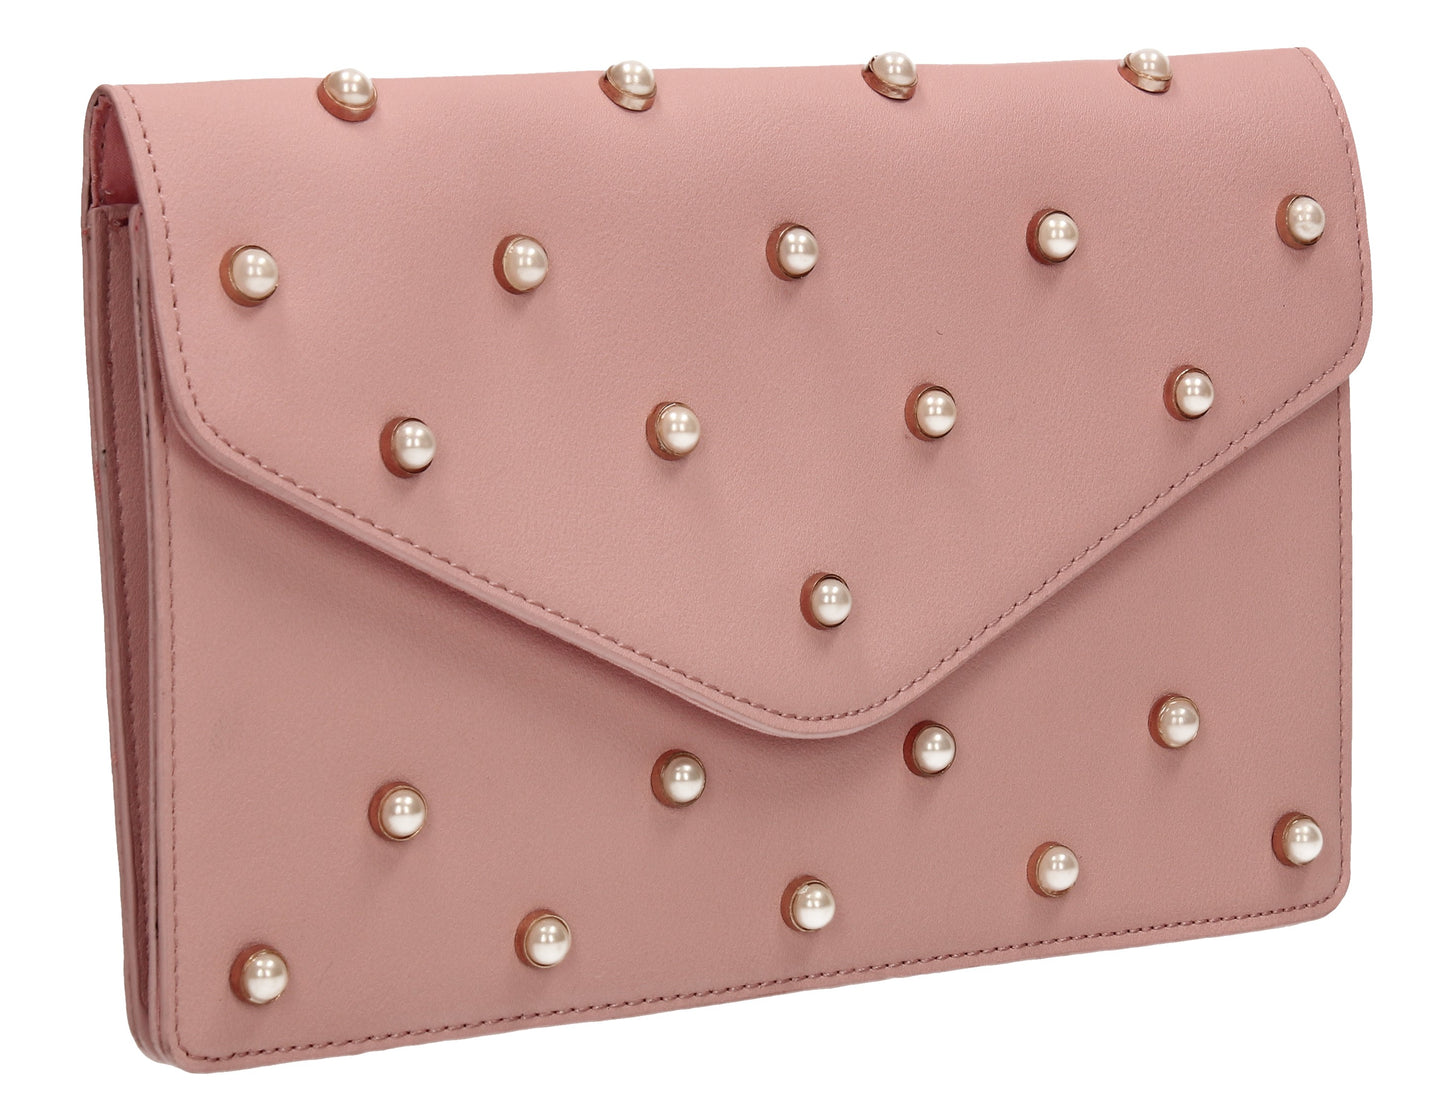 SWANKYSWANS Emily Pearl Clutch Bag Pink Cute Cheap Clutch Bag For Weddings School and Work